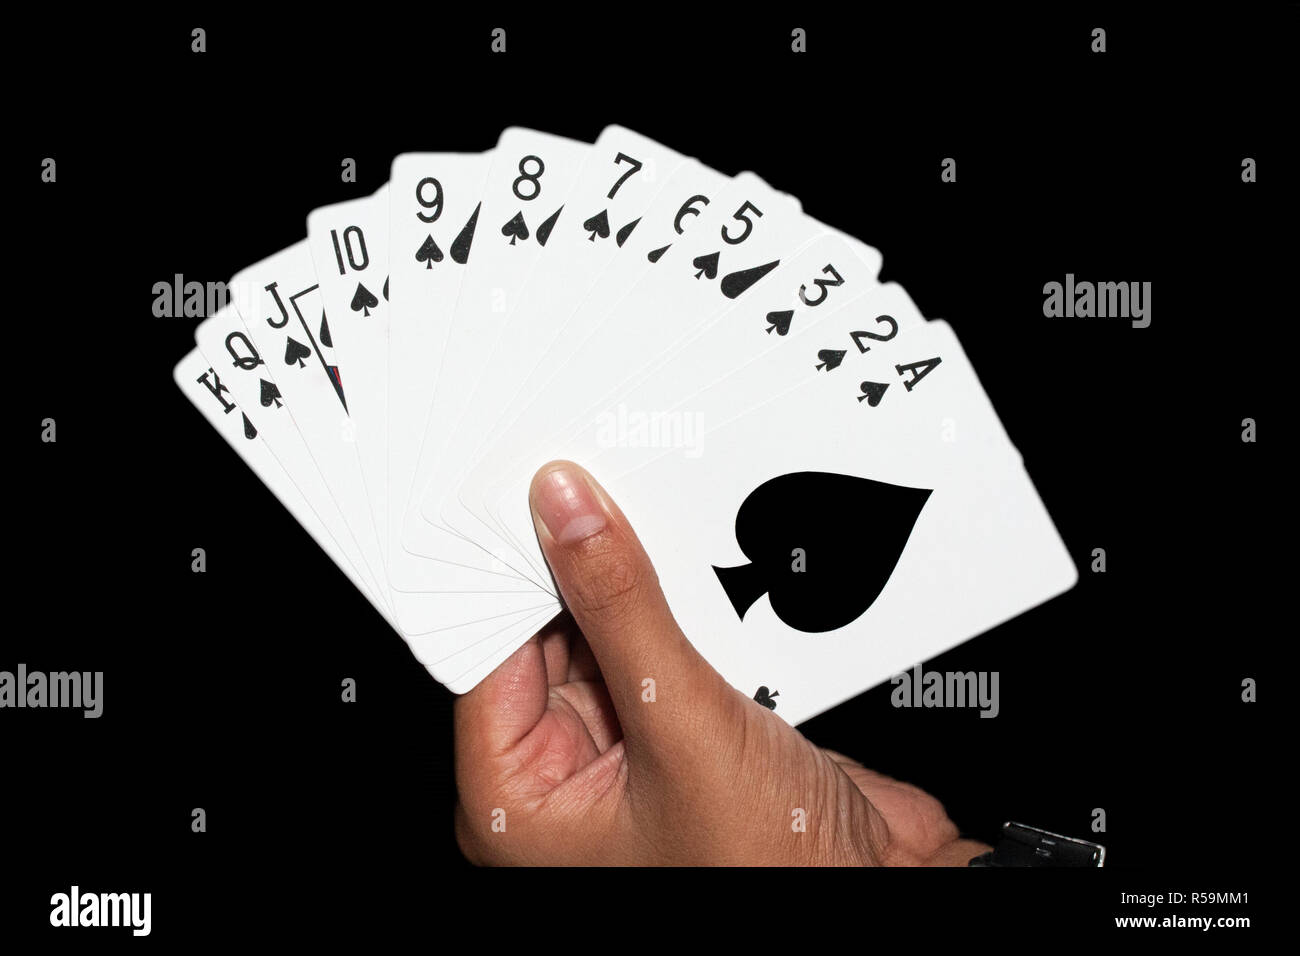 spades cards